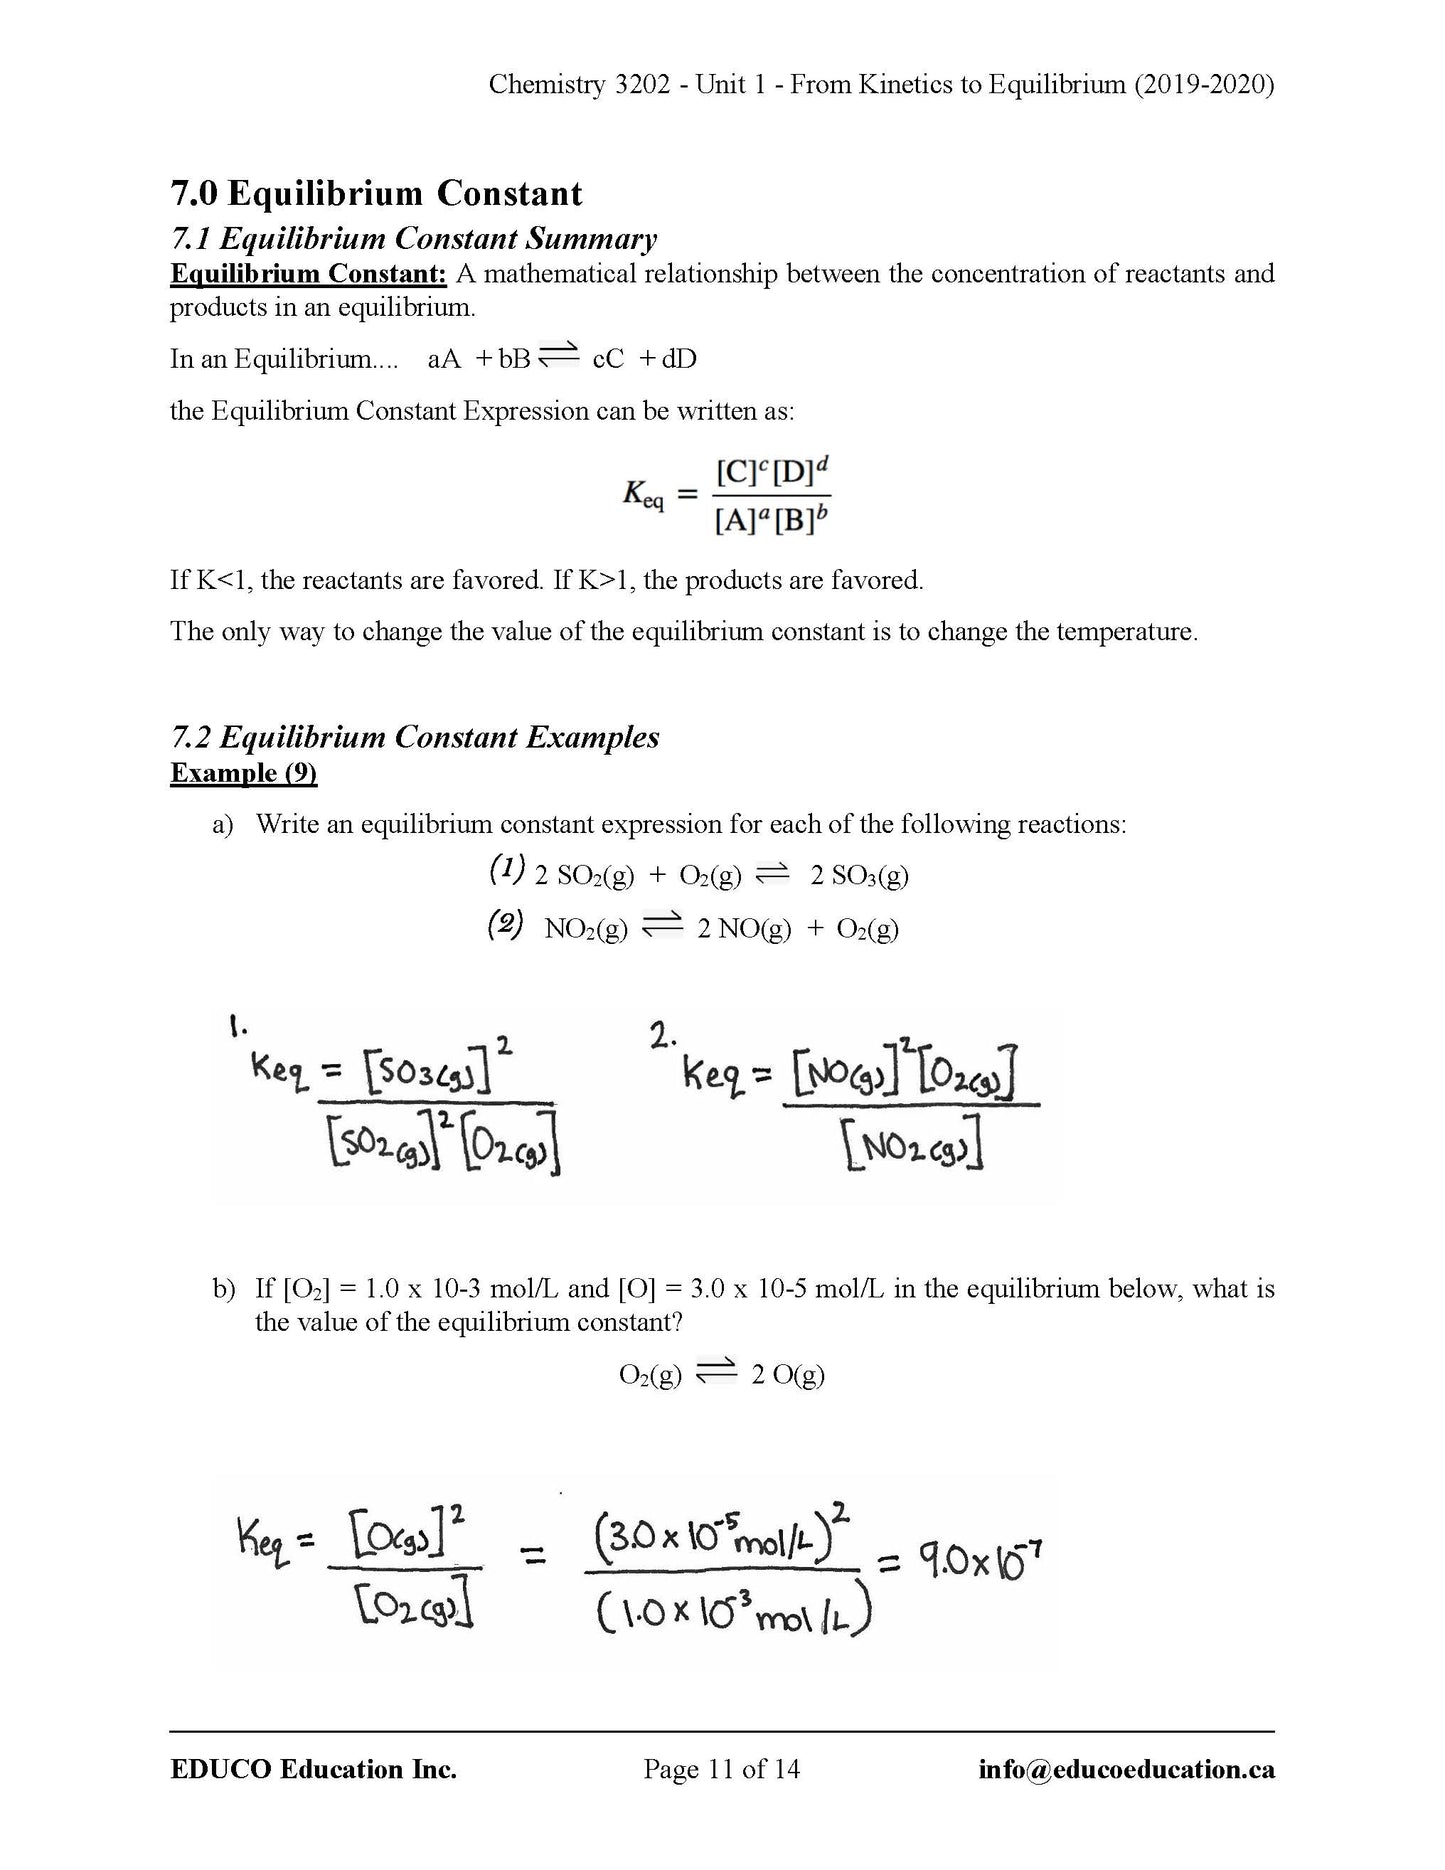 Chemistry 3202 (Physical Workbook)